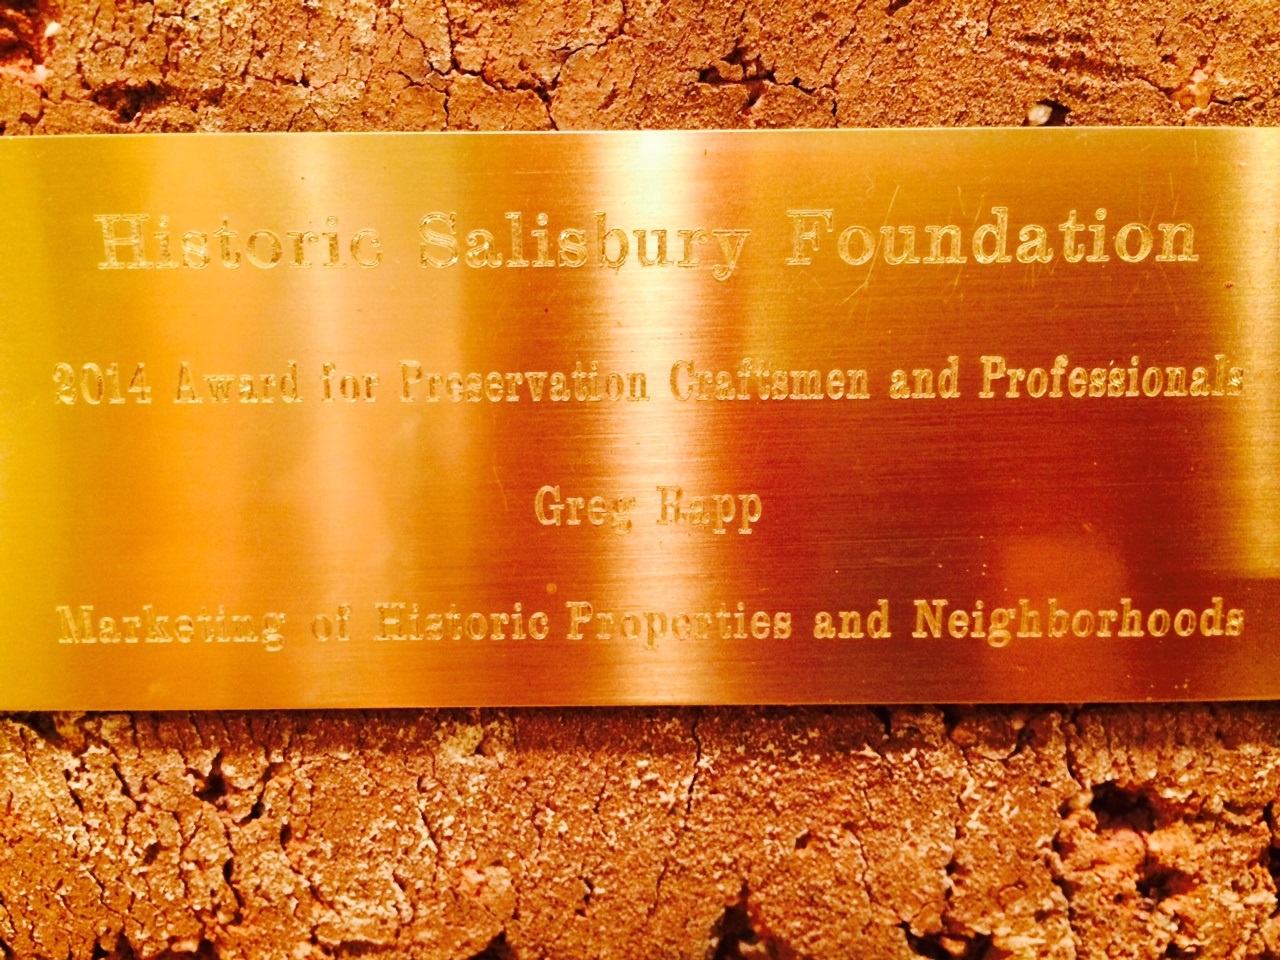 Greg Rapp | Recognized by Historic Salisbury Foundation